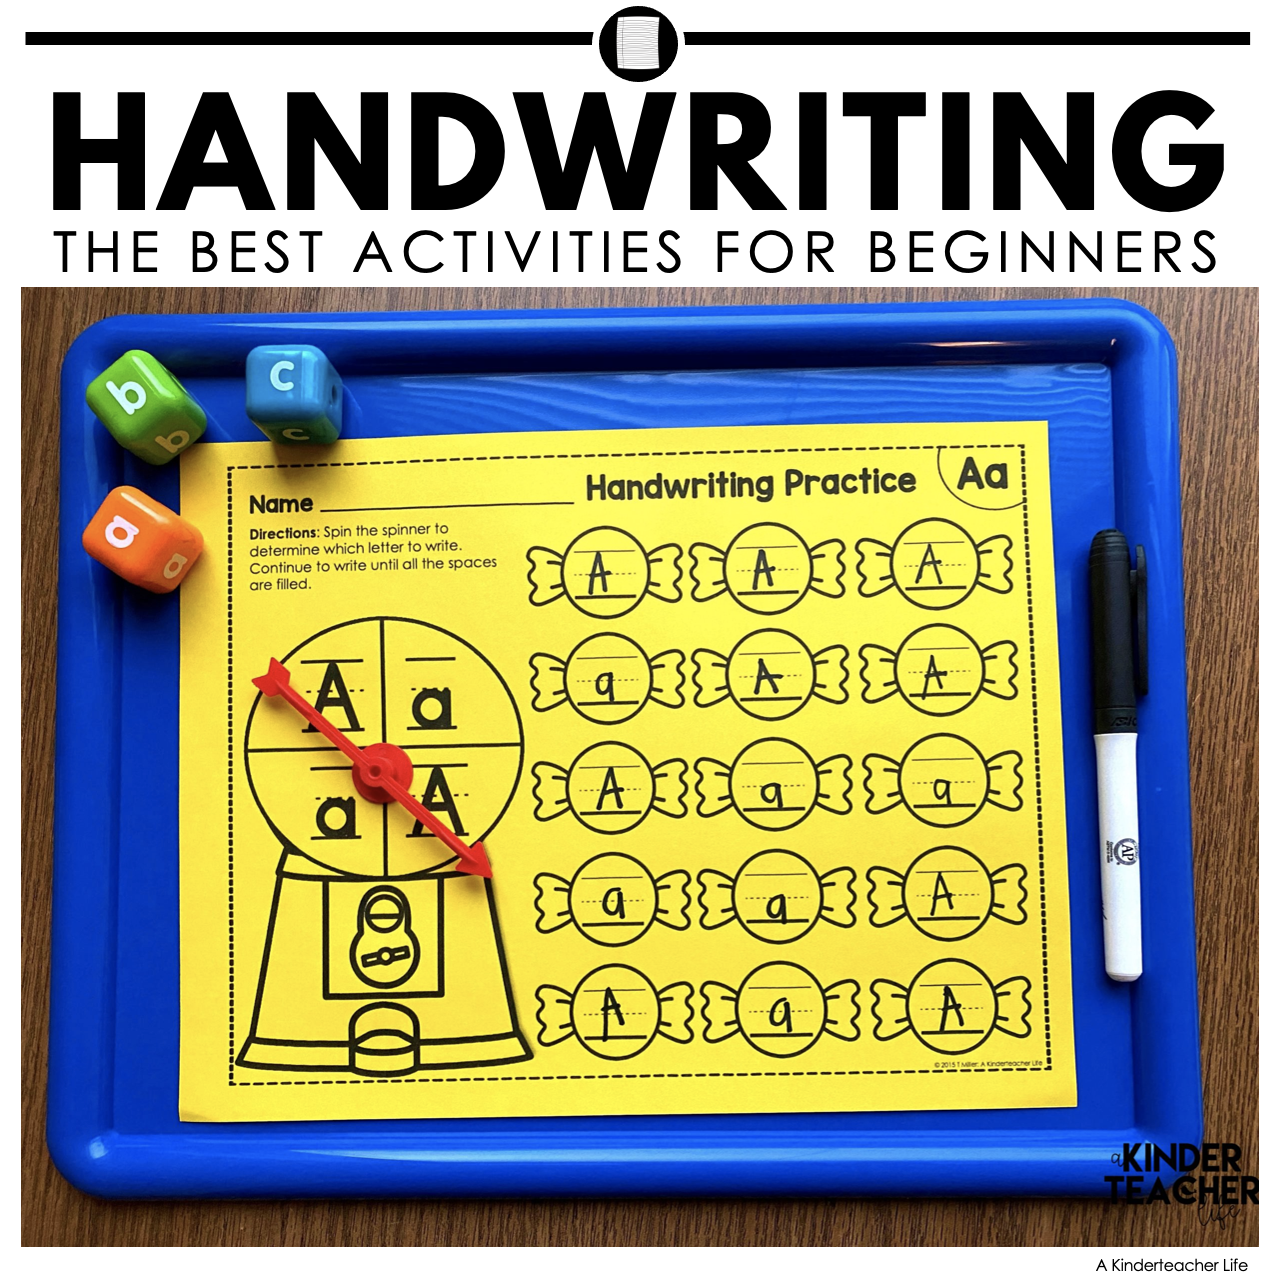 The Best Handwriting Activities for Beginners